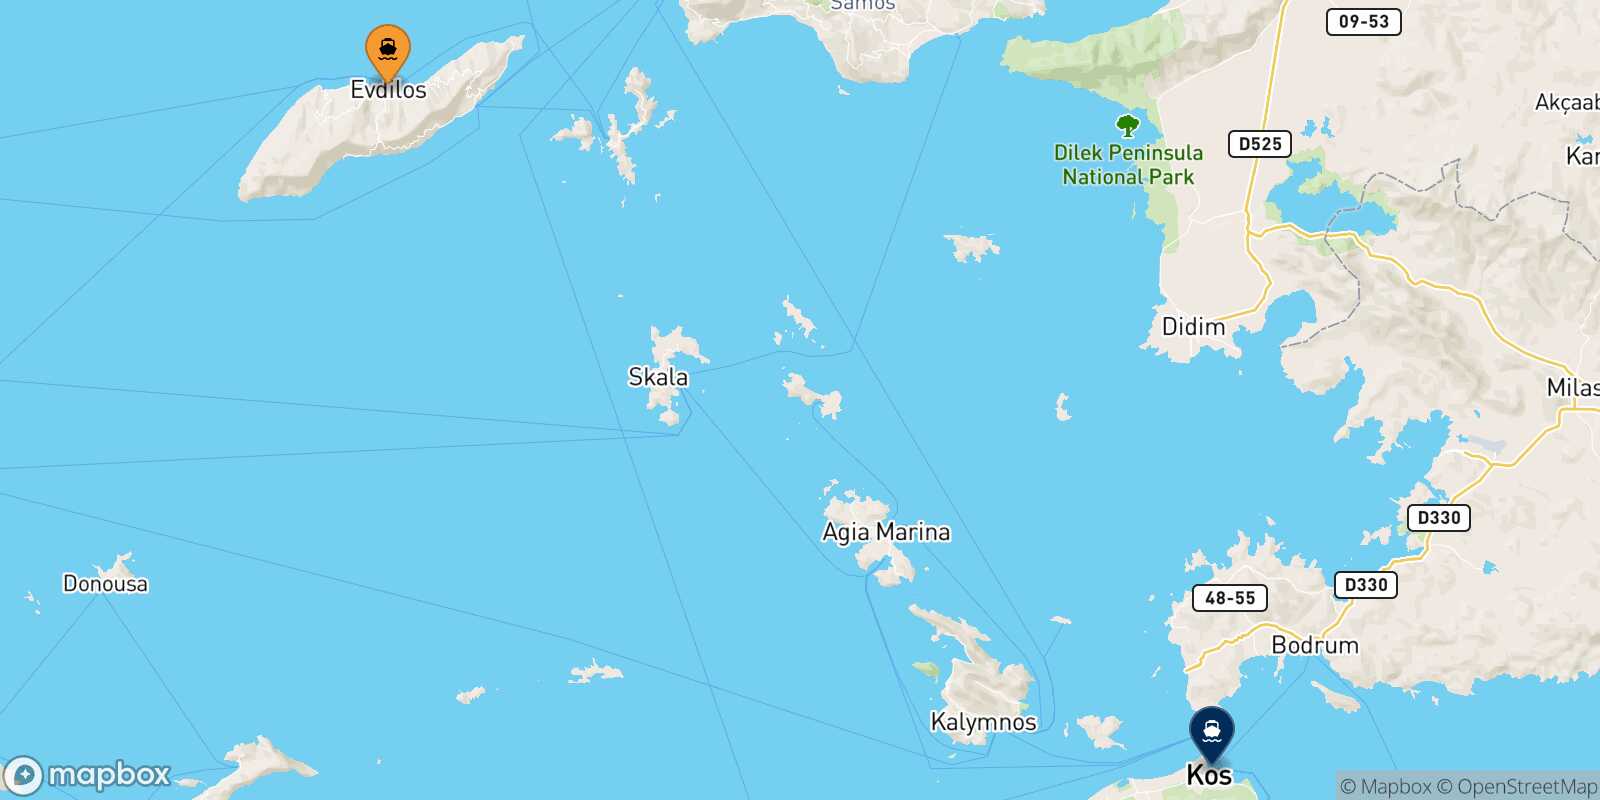 Evdilos (Ikaria) Kos route map